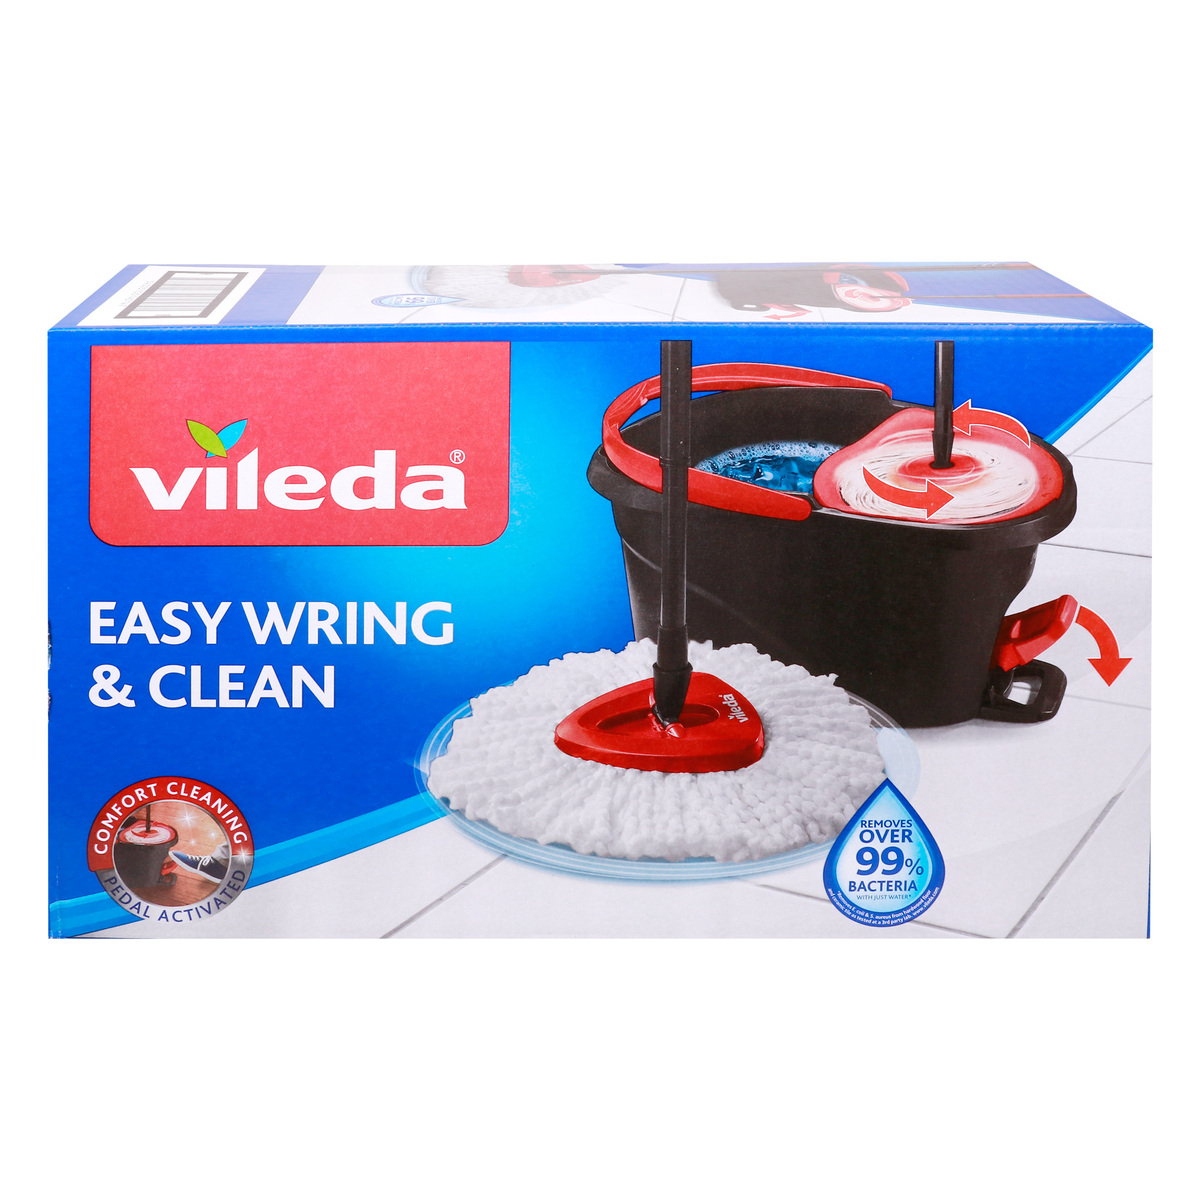 Vileda Easy Wring & Clean Spin Mop / Rotating Mop 1 Set